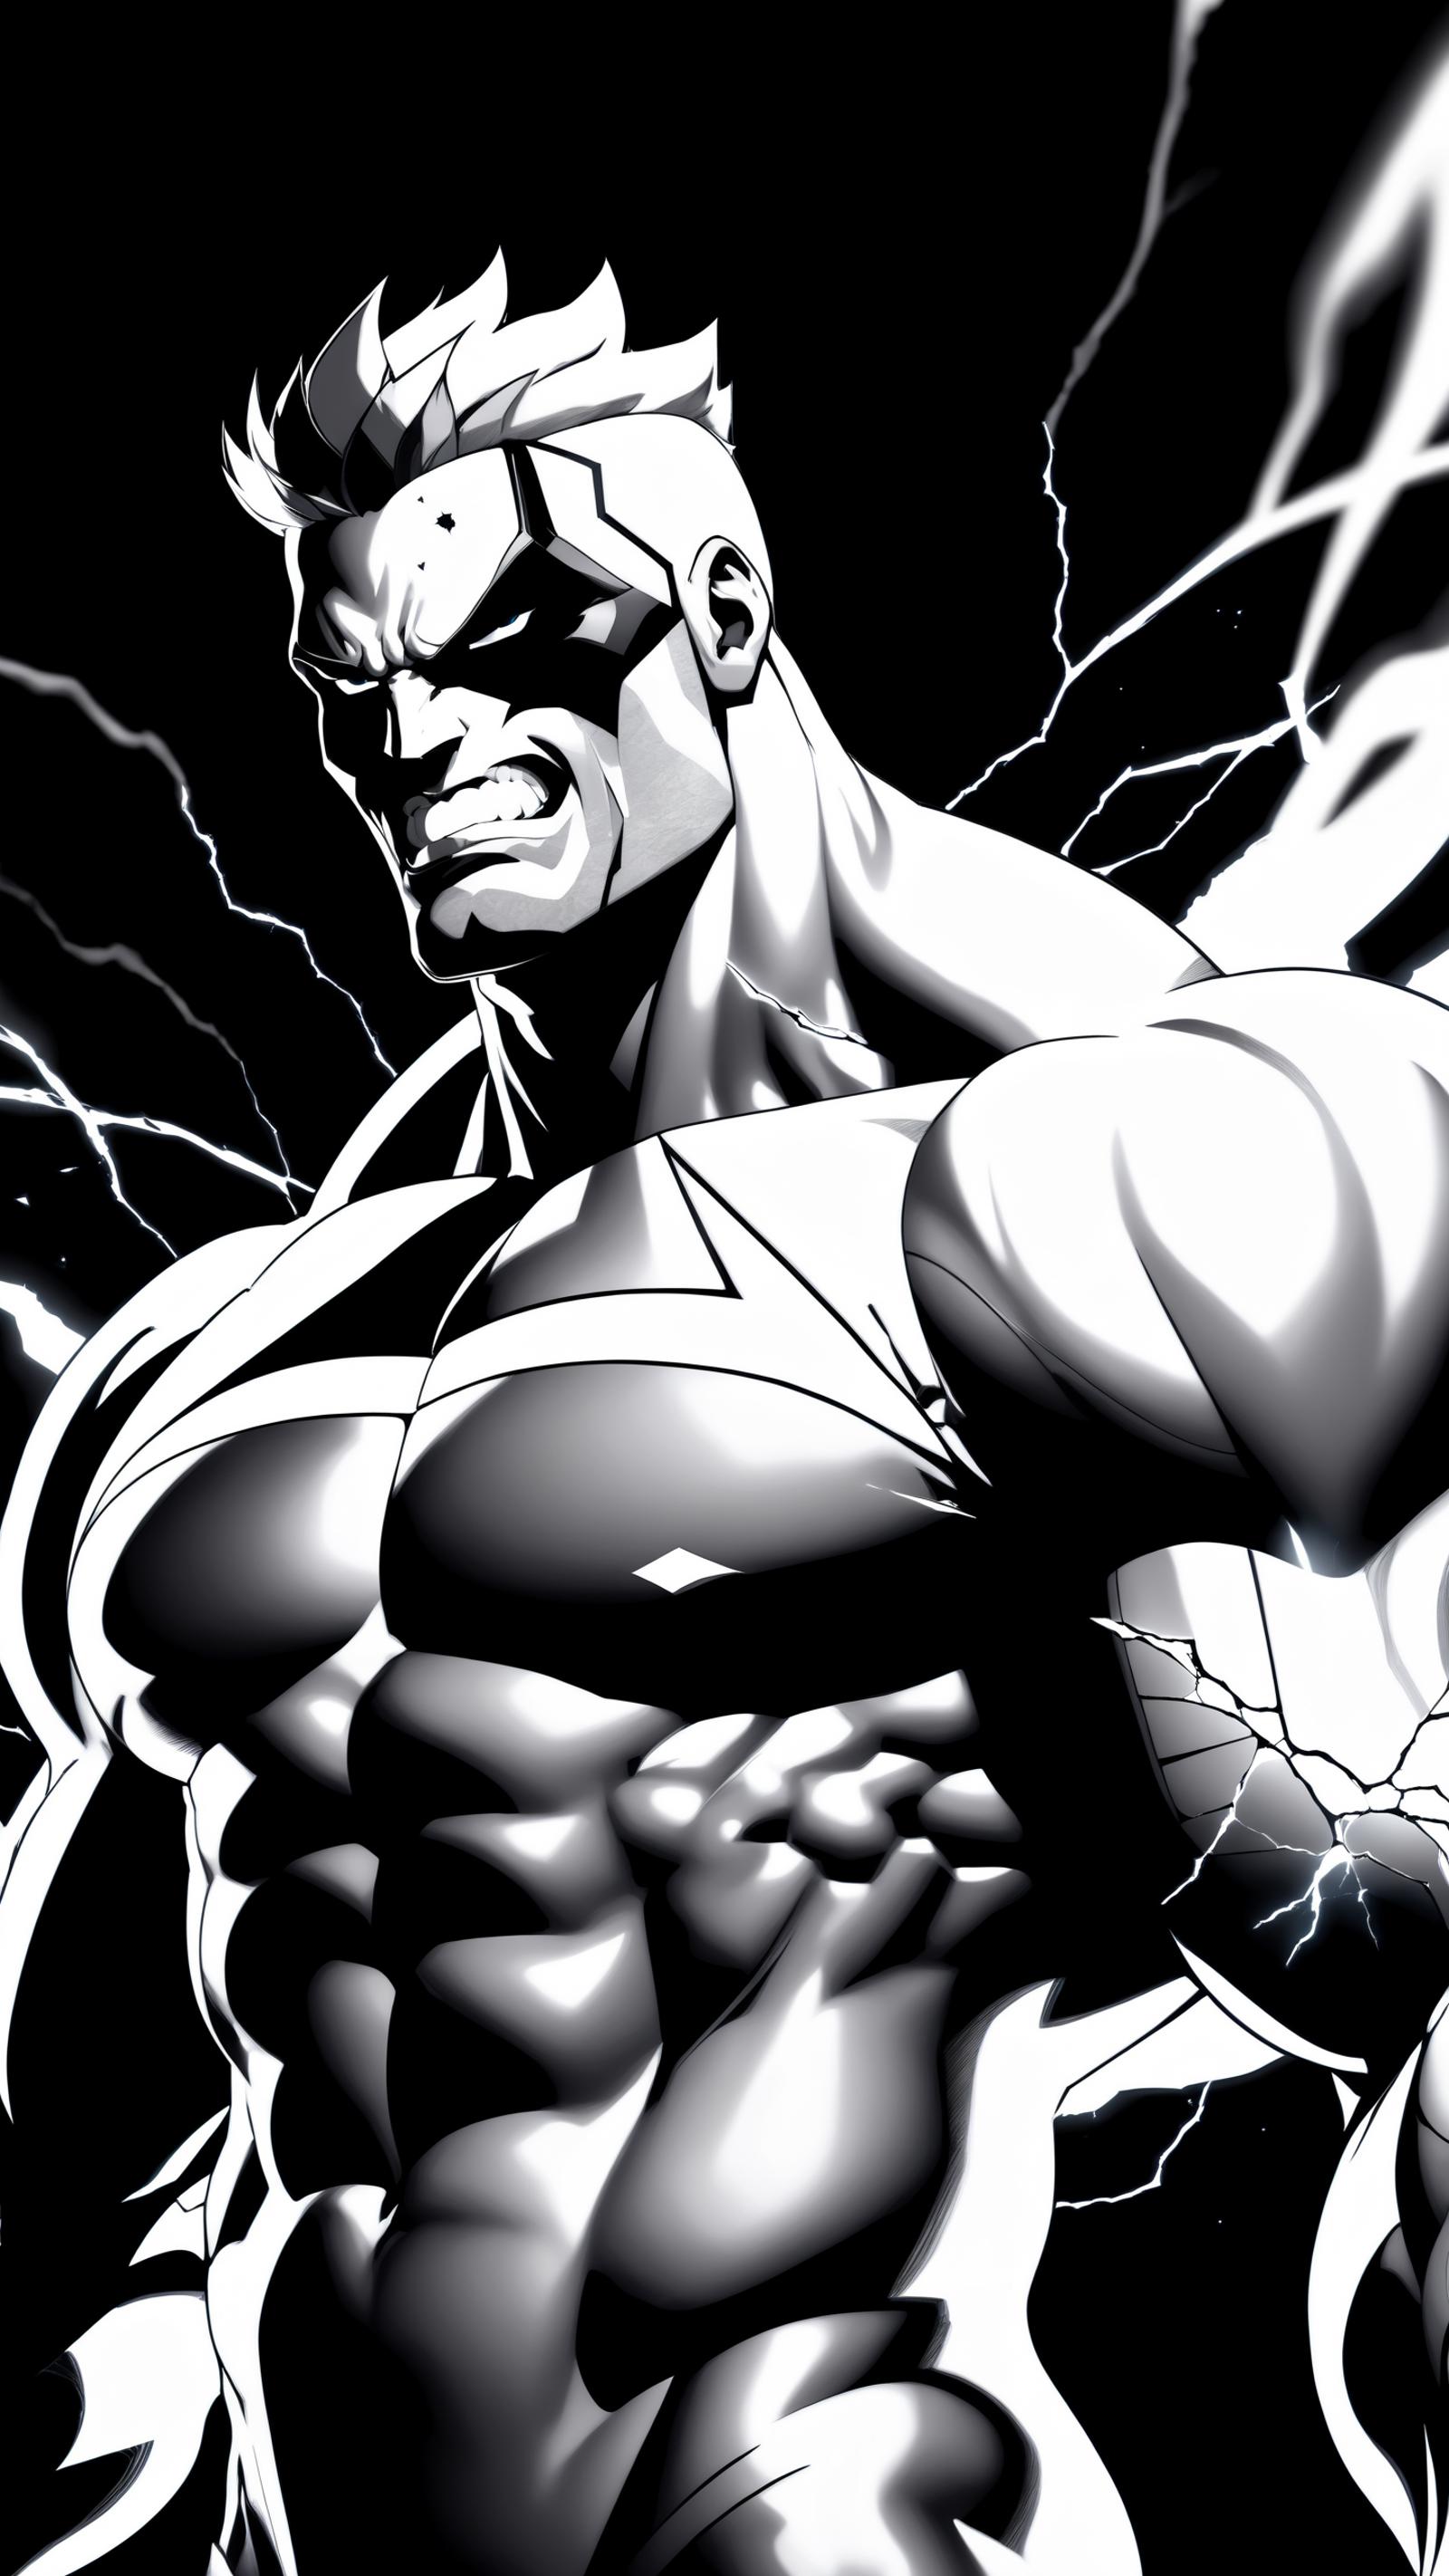 A muscular black and white comic book superhero.